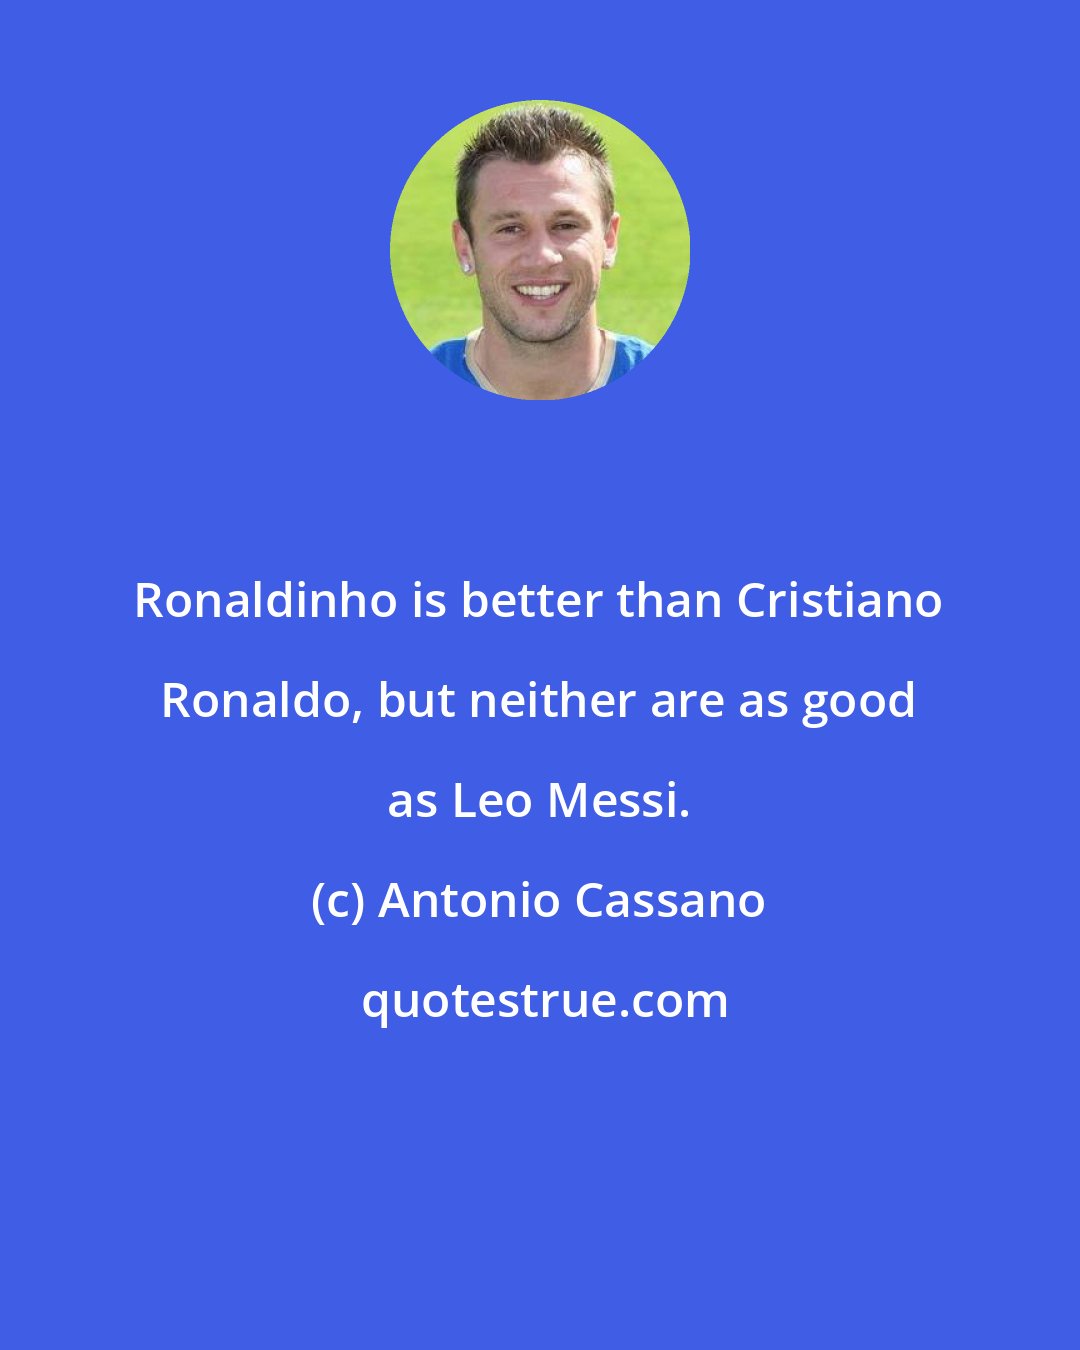 Antonio Cassano: Ronaldinho is better than Cristiano Ronaldo, but neither are as good as Leo Messi.